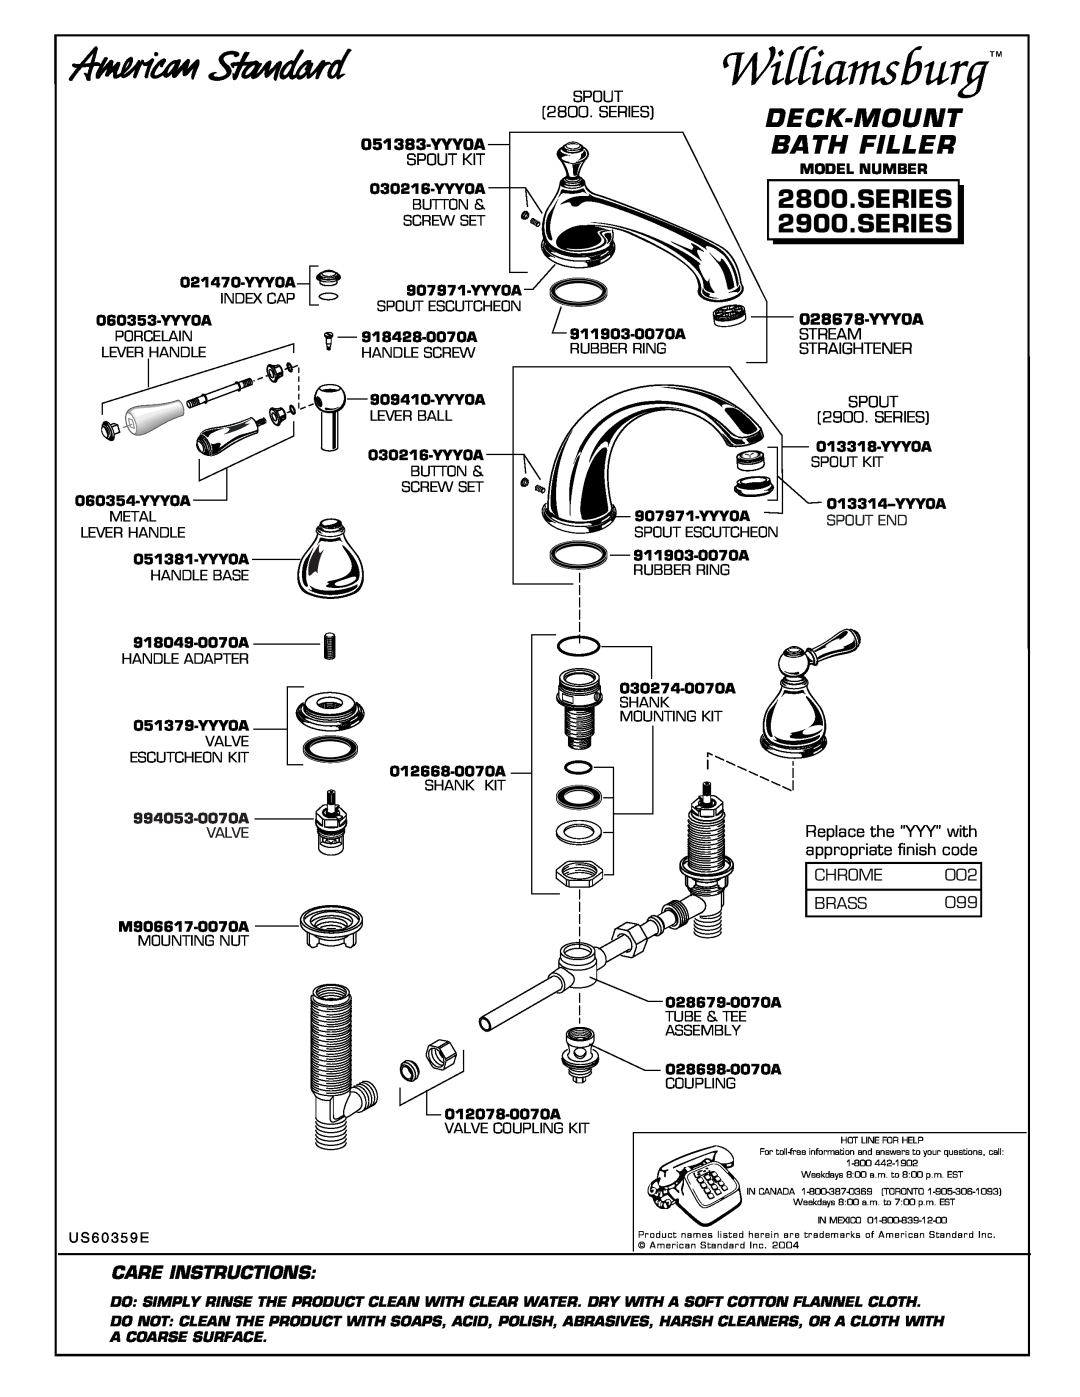 American Standard 2800.SERIES Deck-Mount, Bath Filler, Series, Williamsburg T M, Care Instructions, 994053-0070A, Valve 